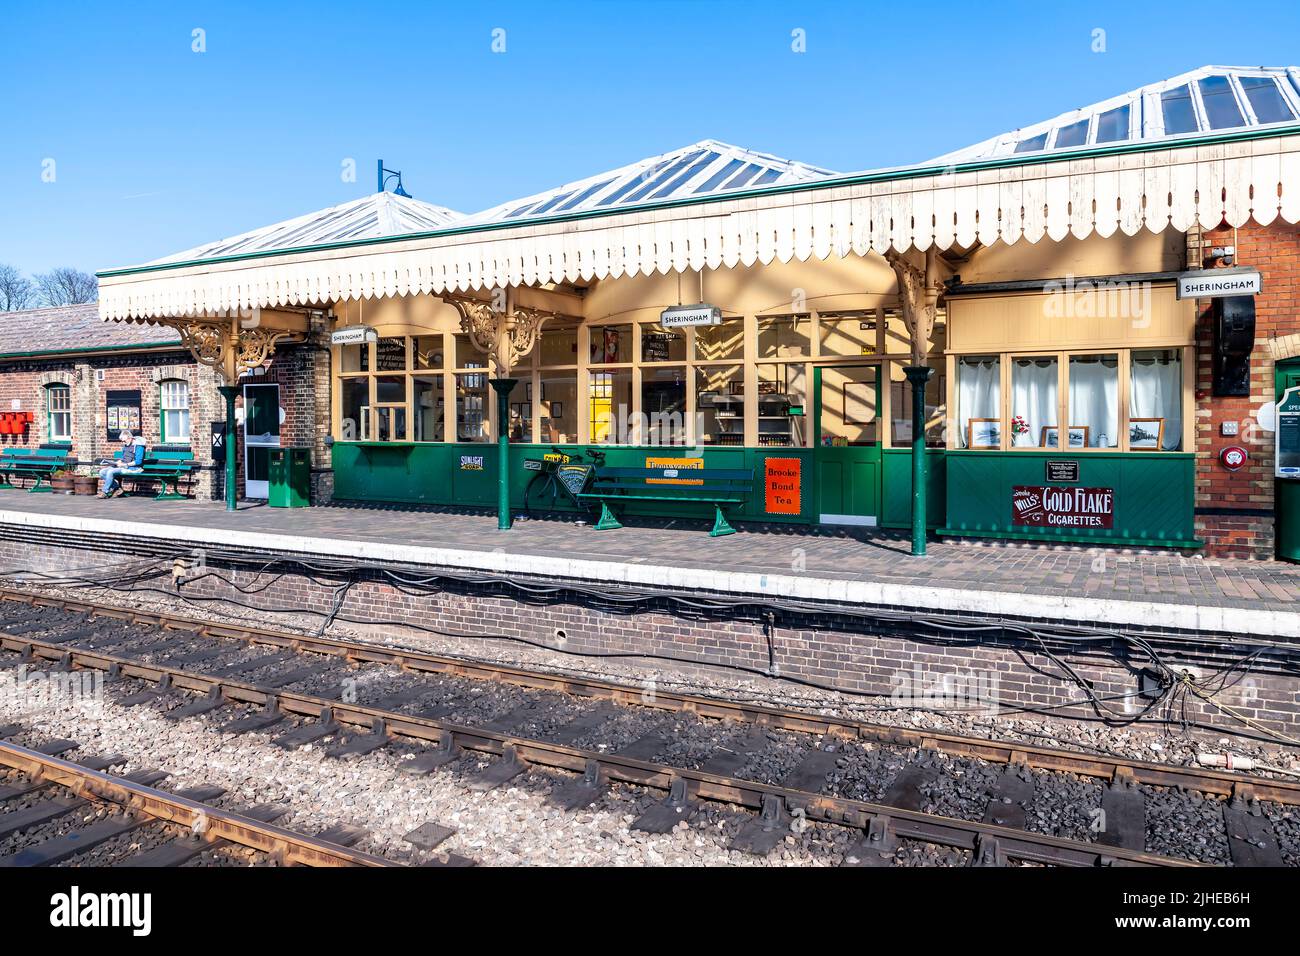 Station platform at Sheringham station, North Norfolk Railway – The Poppy Line, East Anglia, England, UK Stock Photo